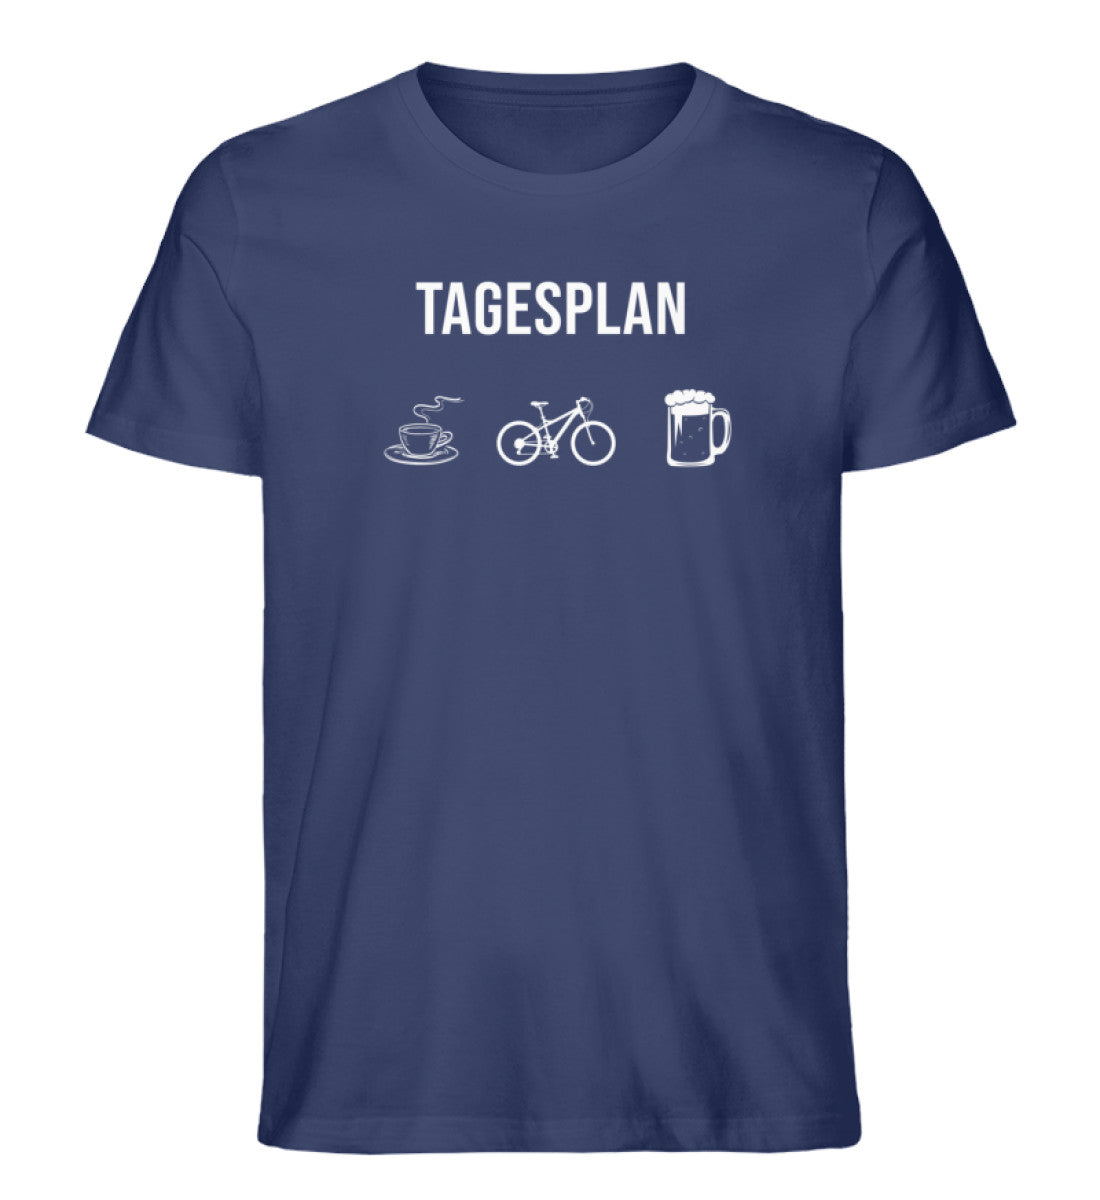 Tagesplan Kaffee, Fahrrad und Bier - Herren Organic T-Shirt fahrrad mountainbike Navyblau